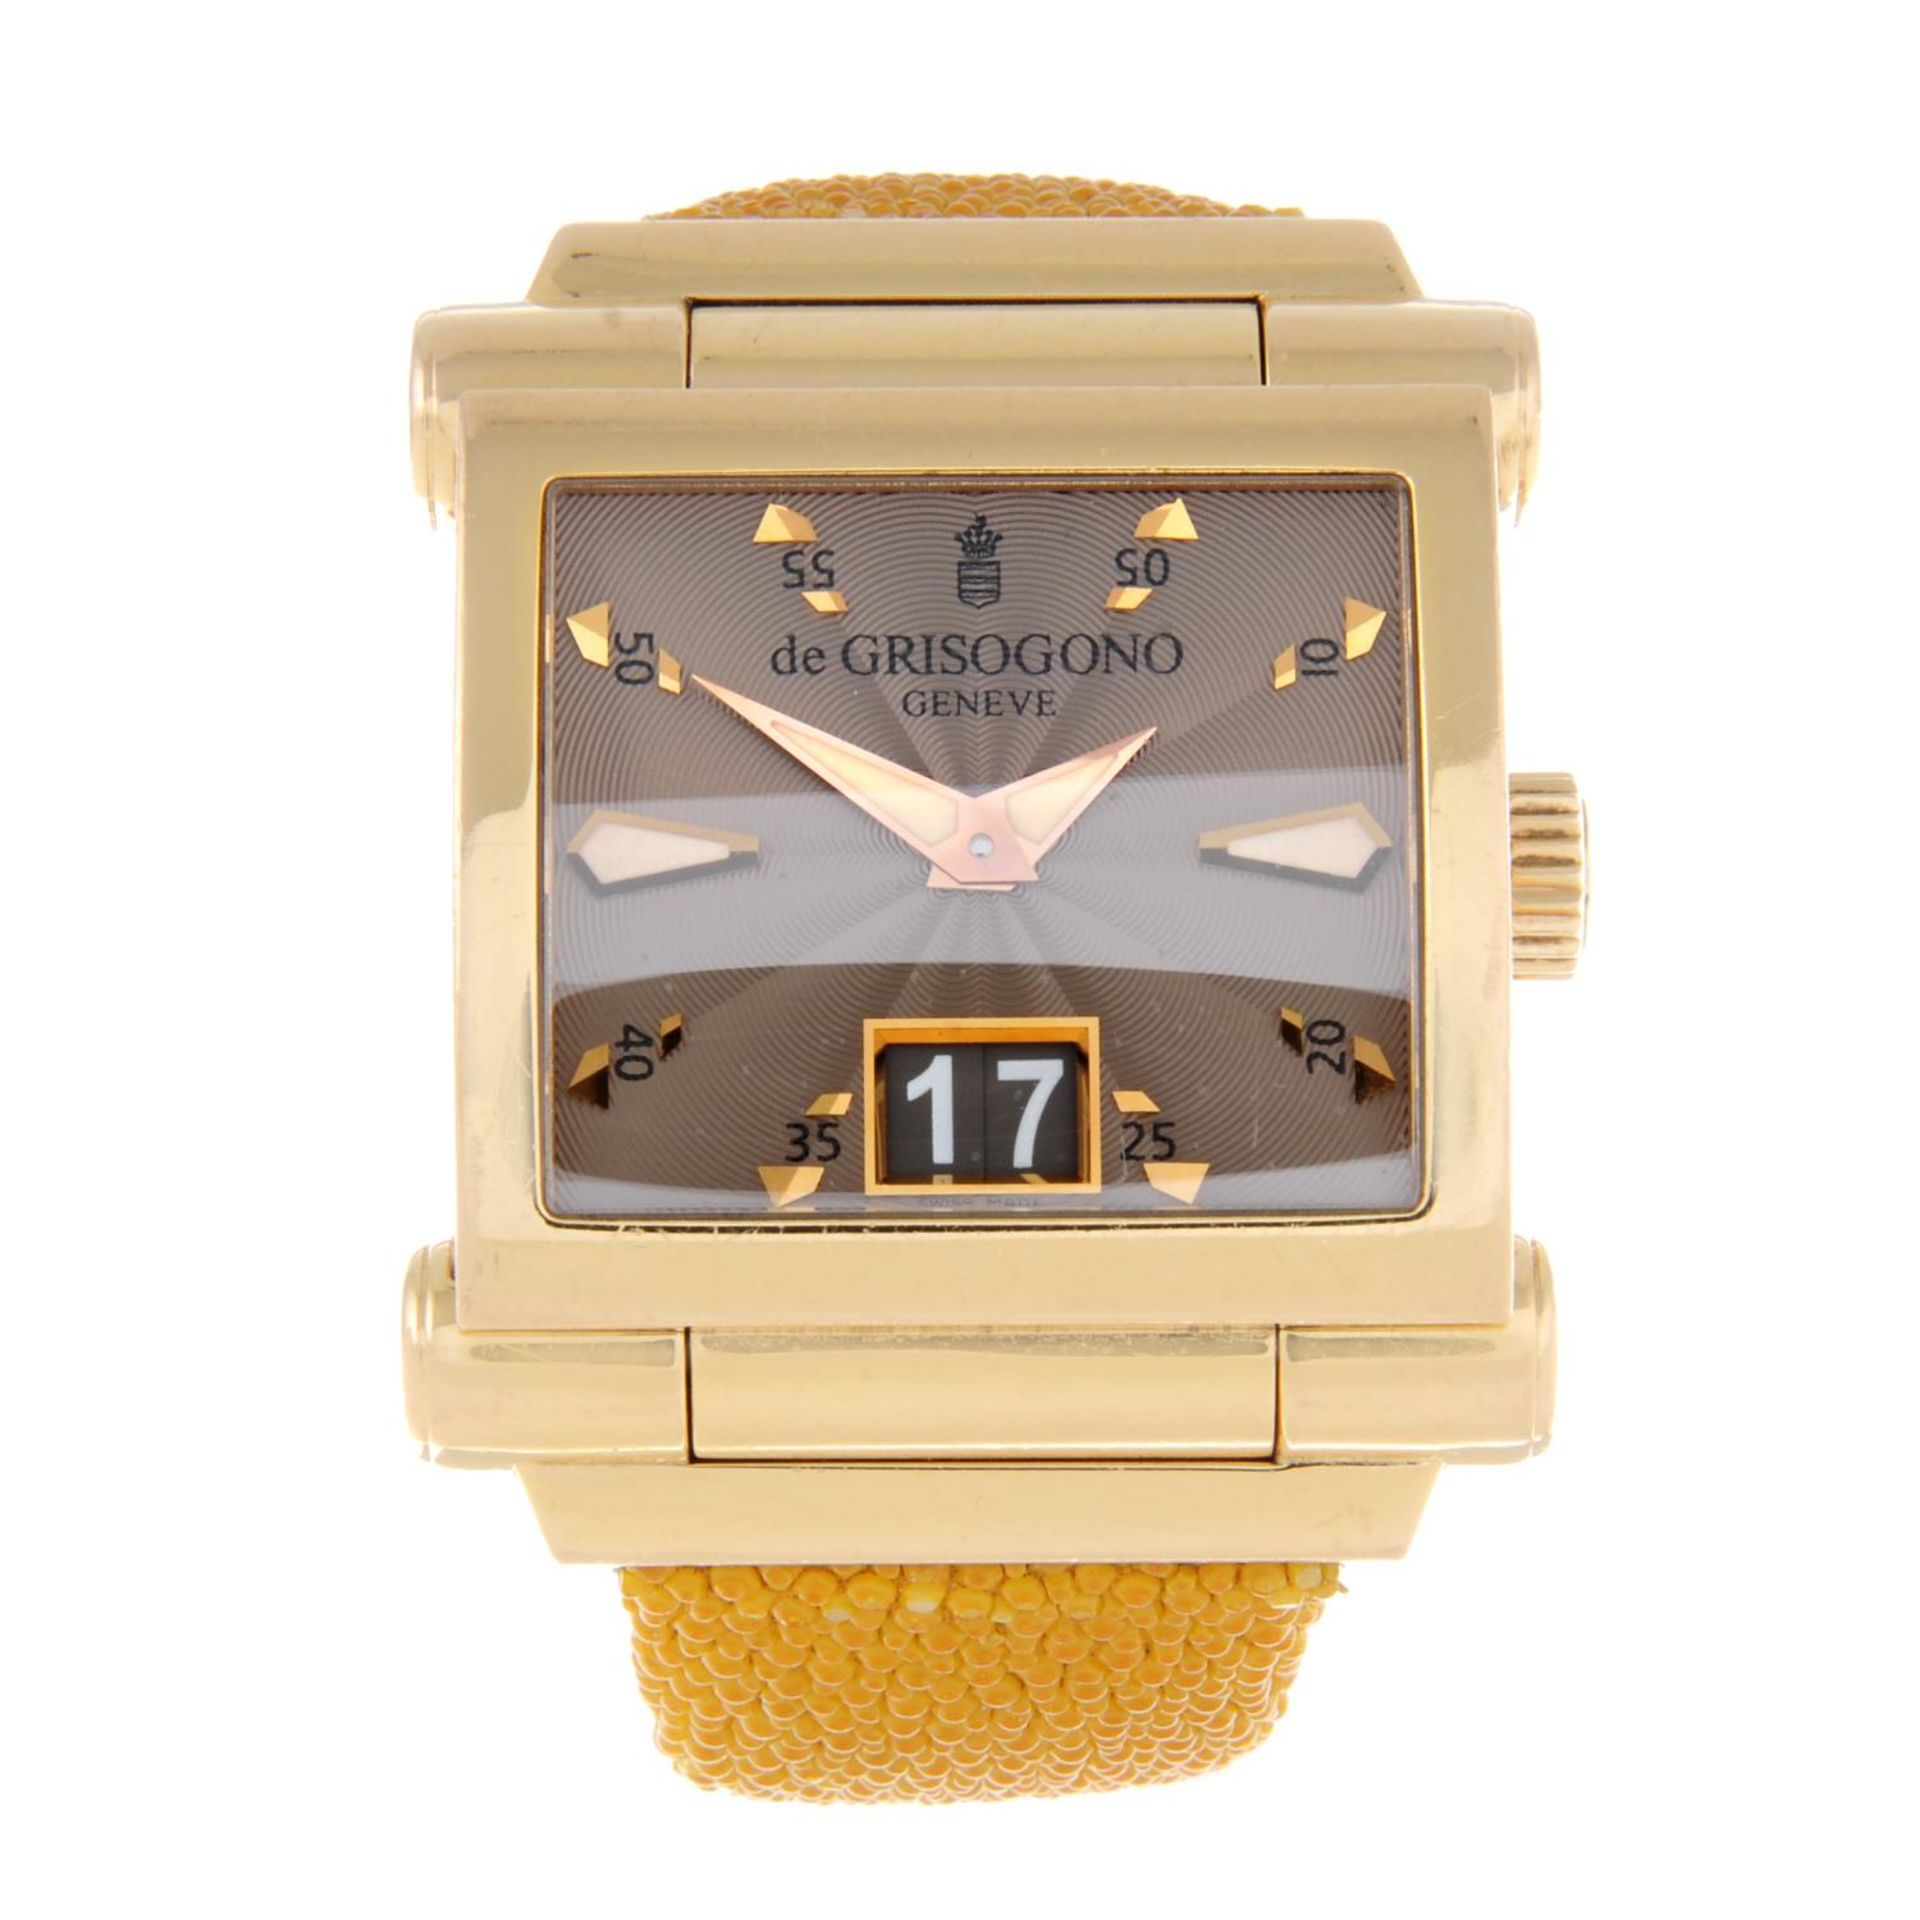 DE GRISOGONO - a gentleman's Instrumento Grande wrist watch.